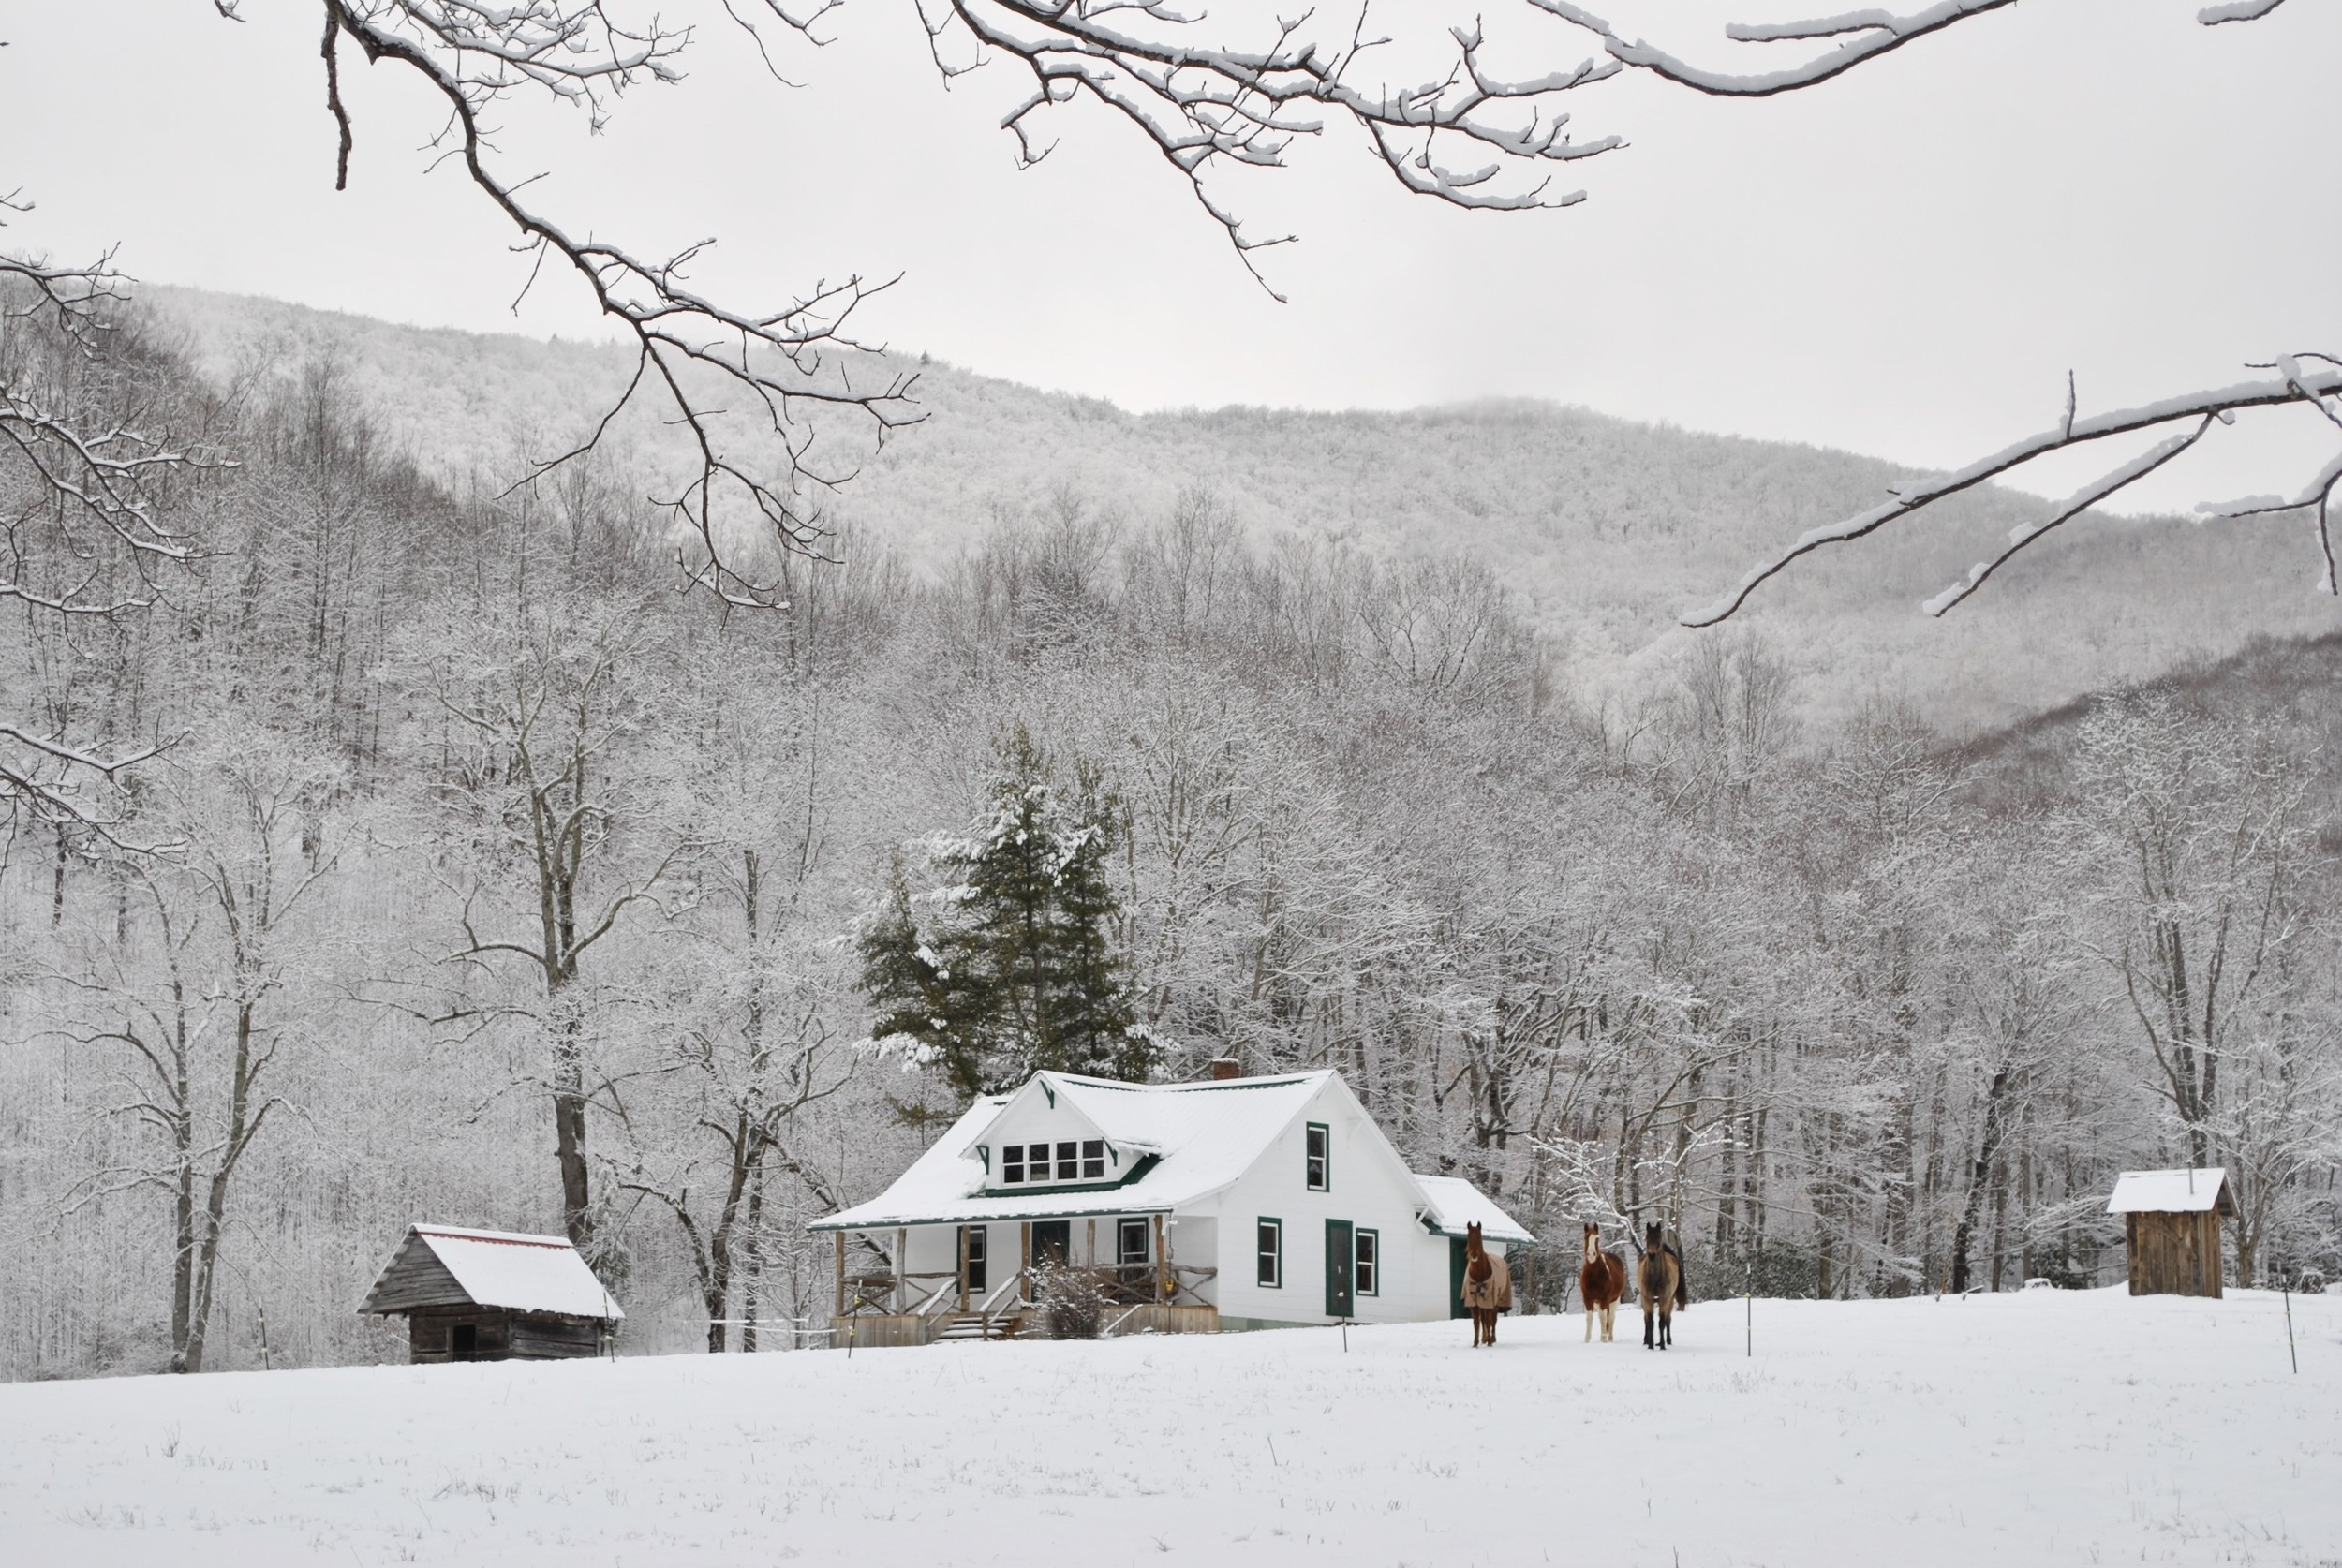 The Pioneer Homestead in Winter